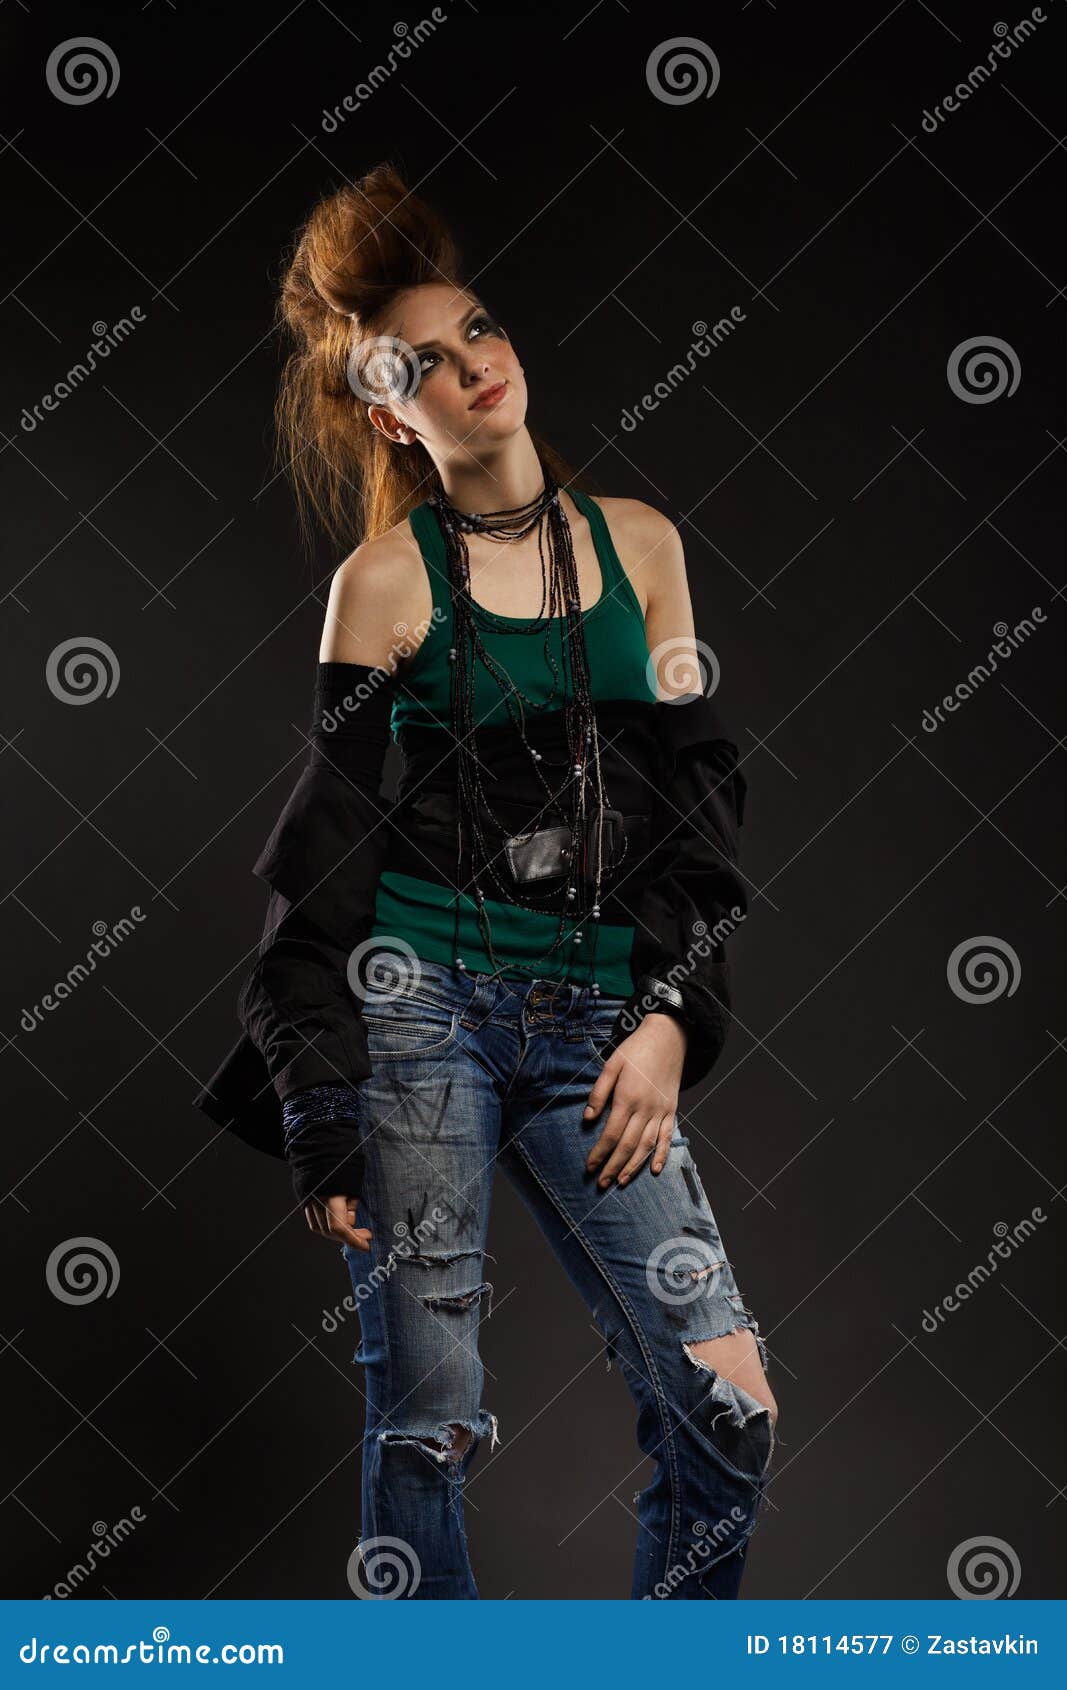 Glam punk girl stock image. Image of jeans, lifestyle - 18114577